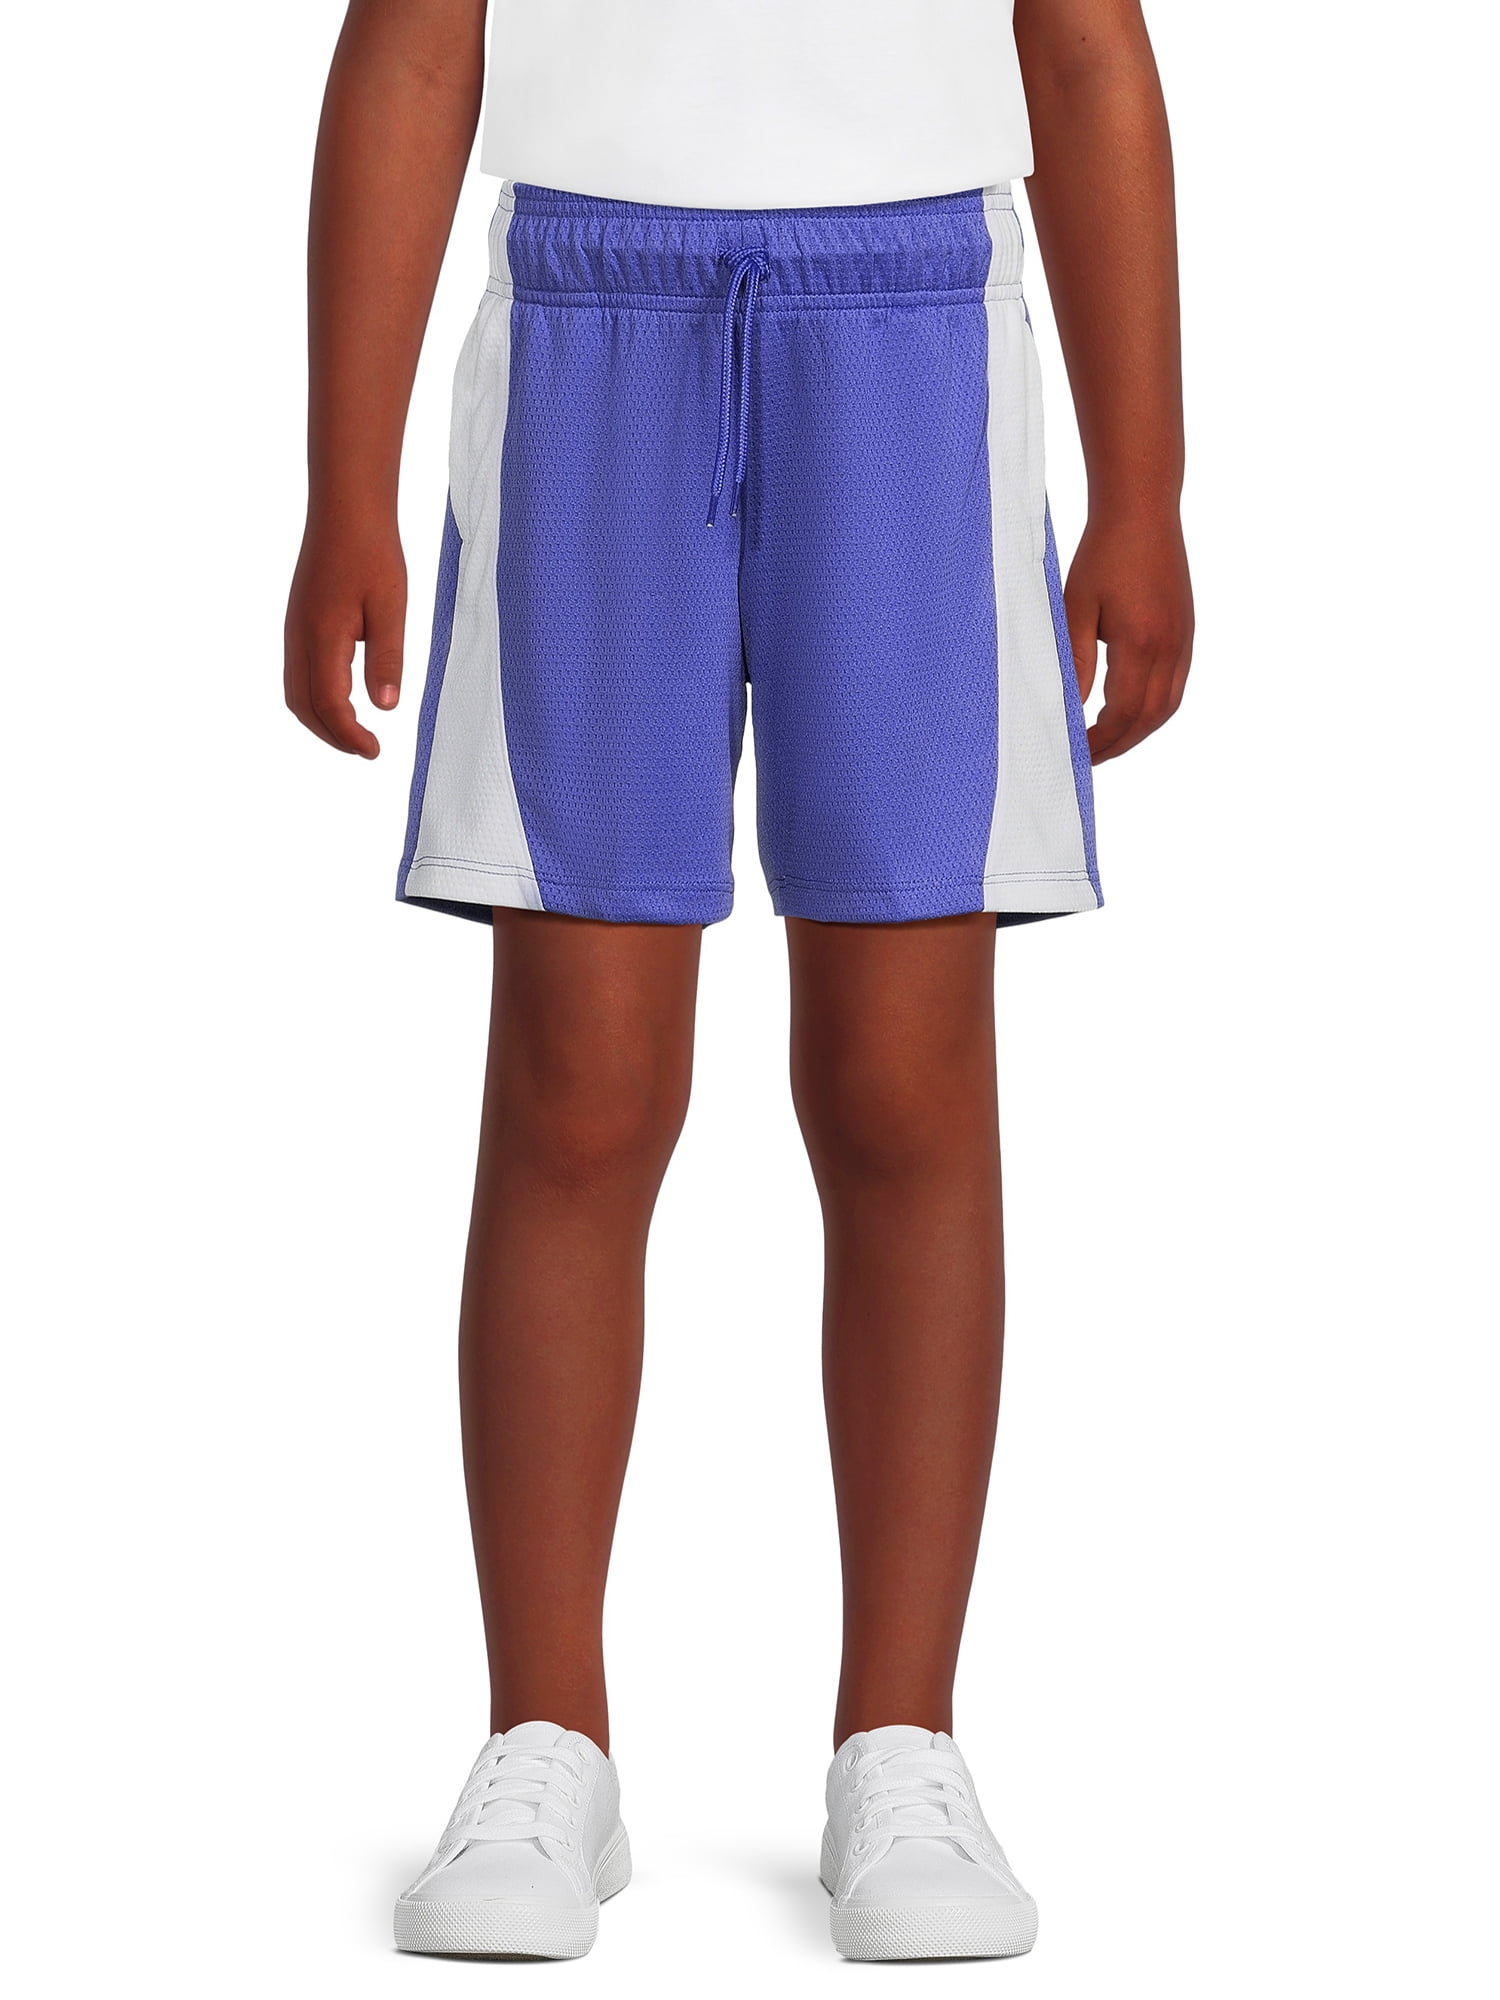 Athletic Works Girls Mesh Colorblocked Basketball Shorts, Sizes 7-8 ...